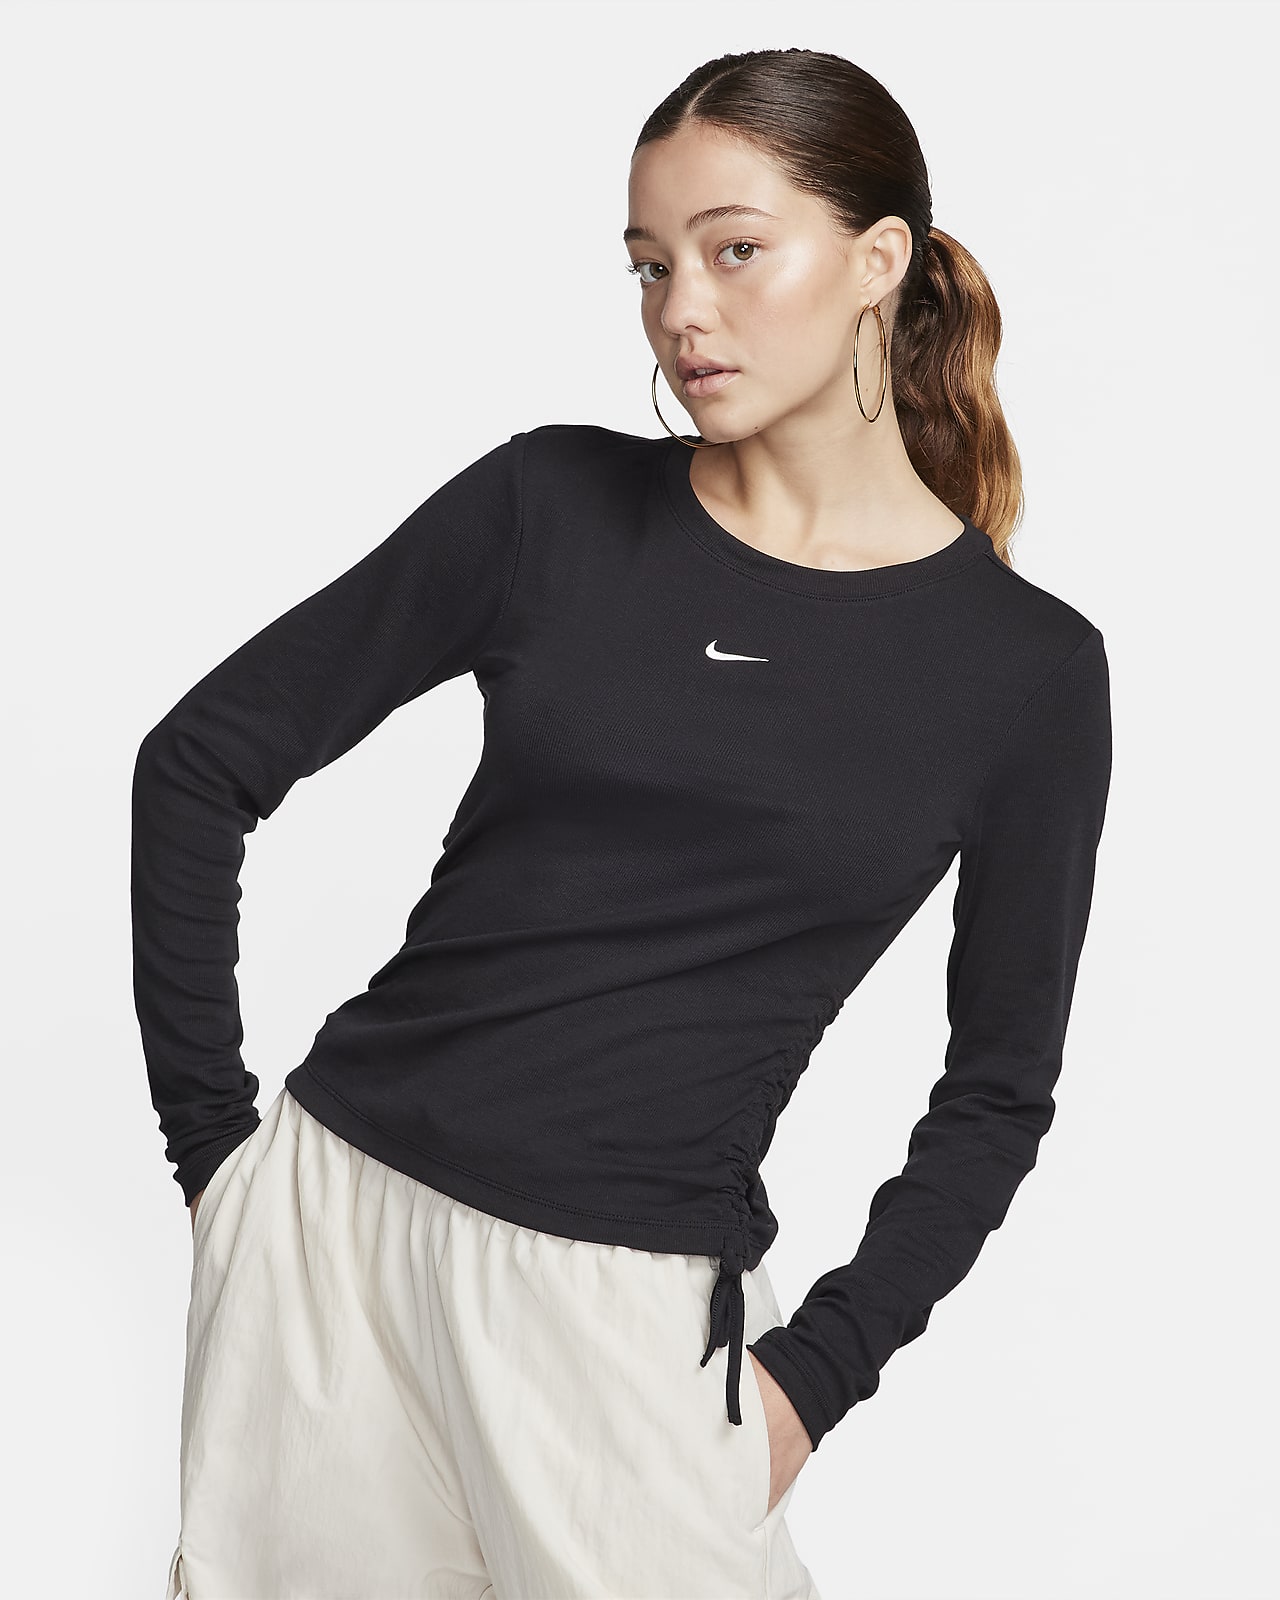 Langærmet, justerbar Nike Sportswear Essential-crop top i rib til kvinder